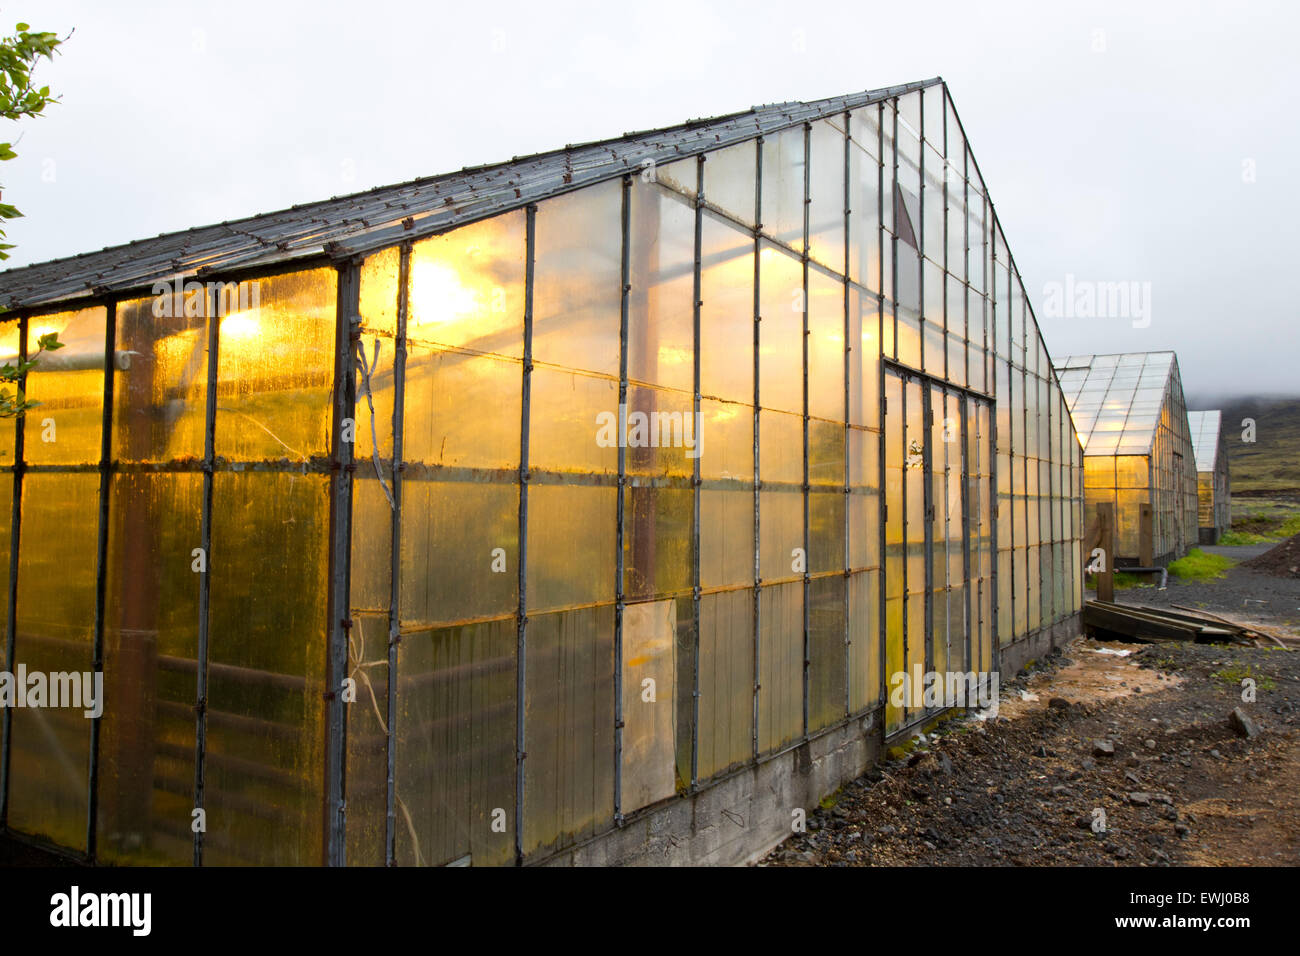 illuminated greenhouses heated by geothermal energy for growing tomatoes Hveragerdi iceland Stock Photo